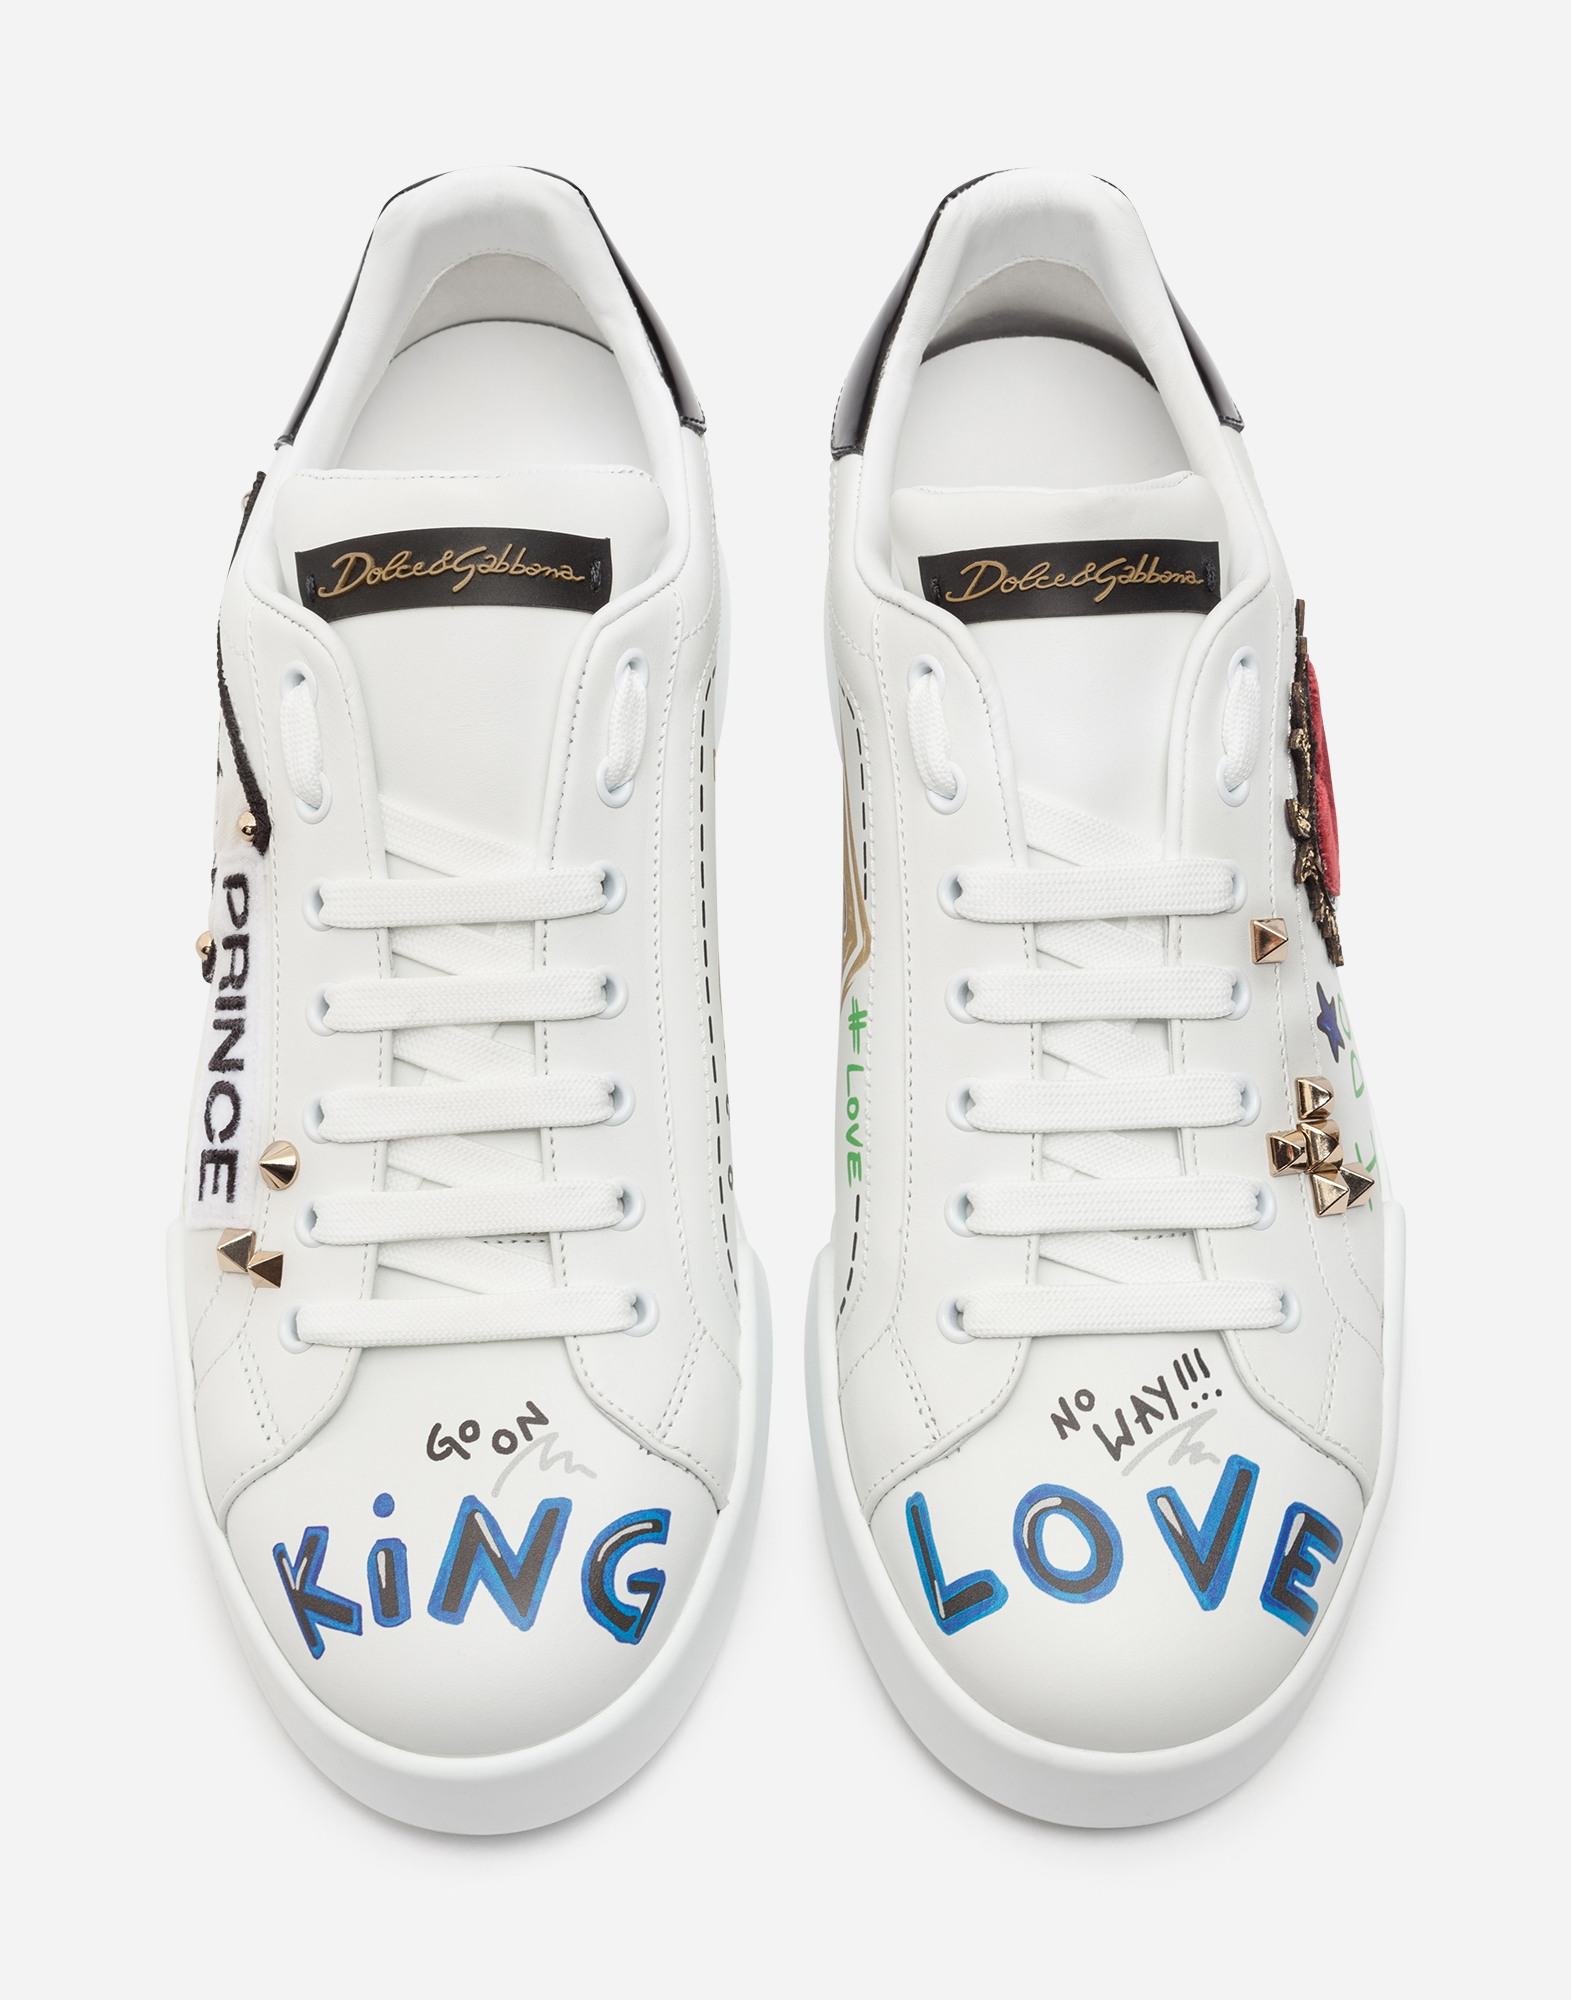 dolce & gabbana king of love sneakers